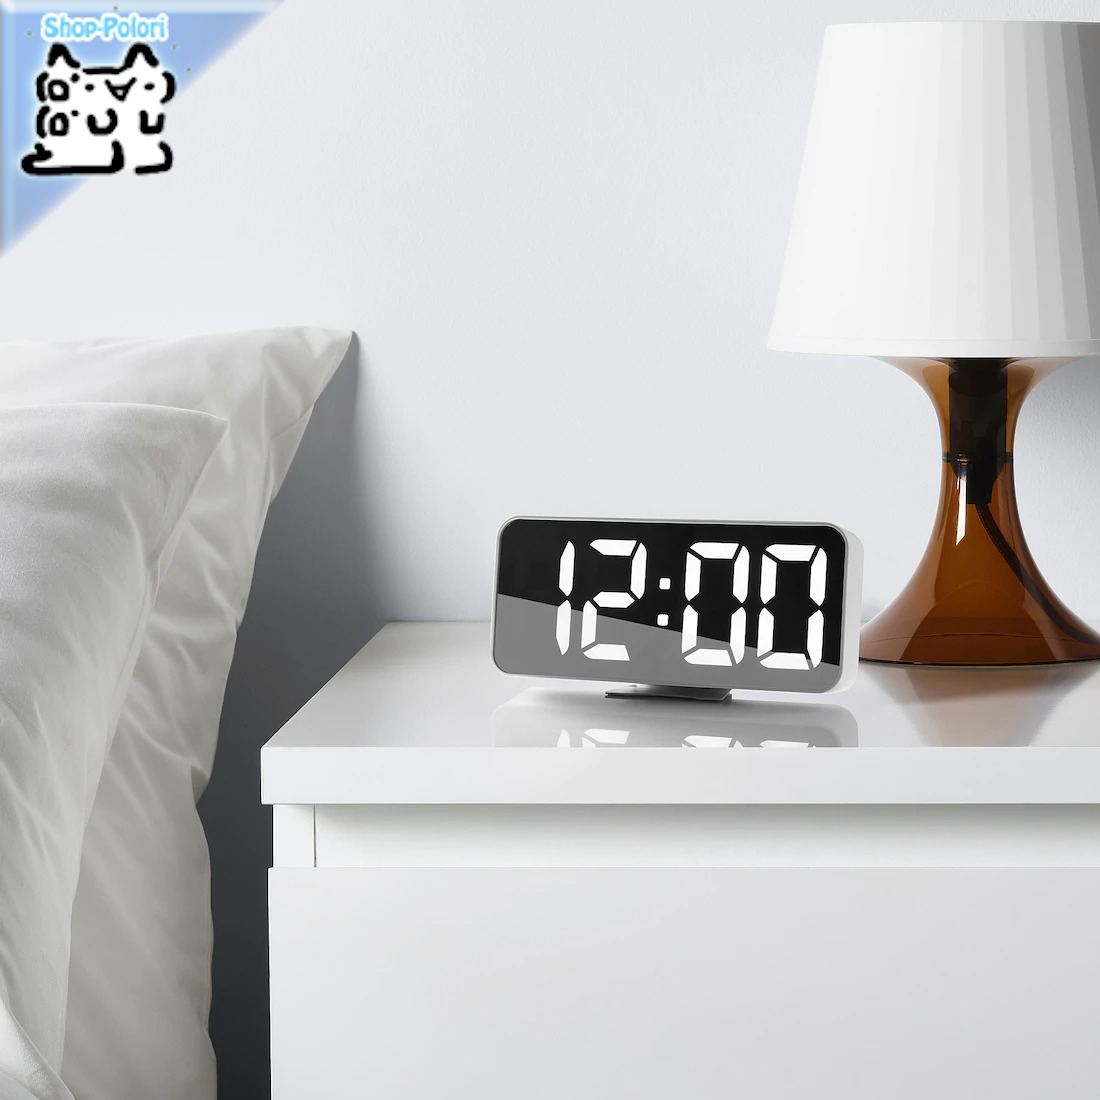 【IKEA Original】NOLLNING -ノールニング- 時計/温度計/アラーム ホワイト18x8 cm画像